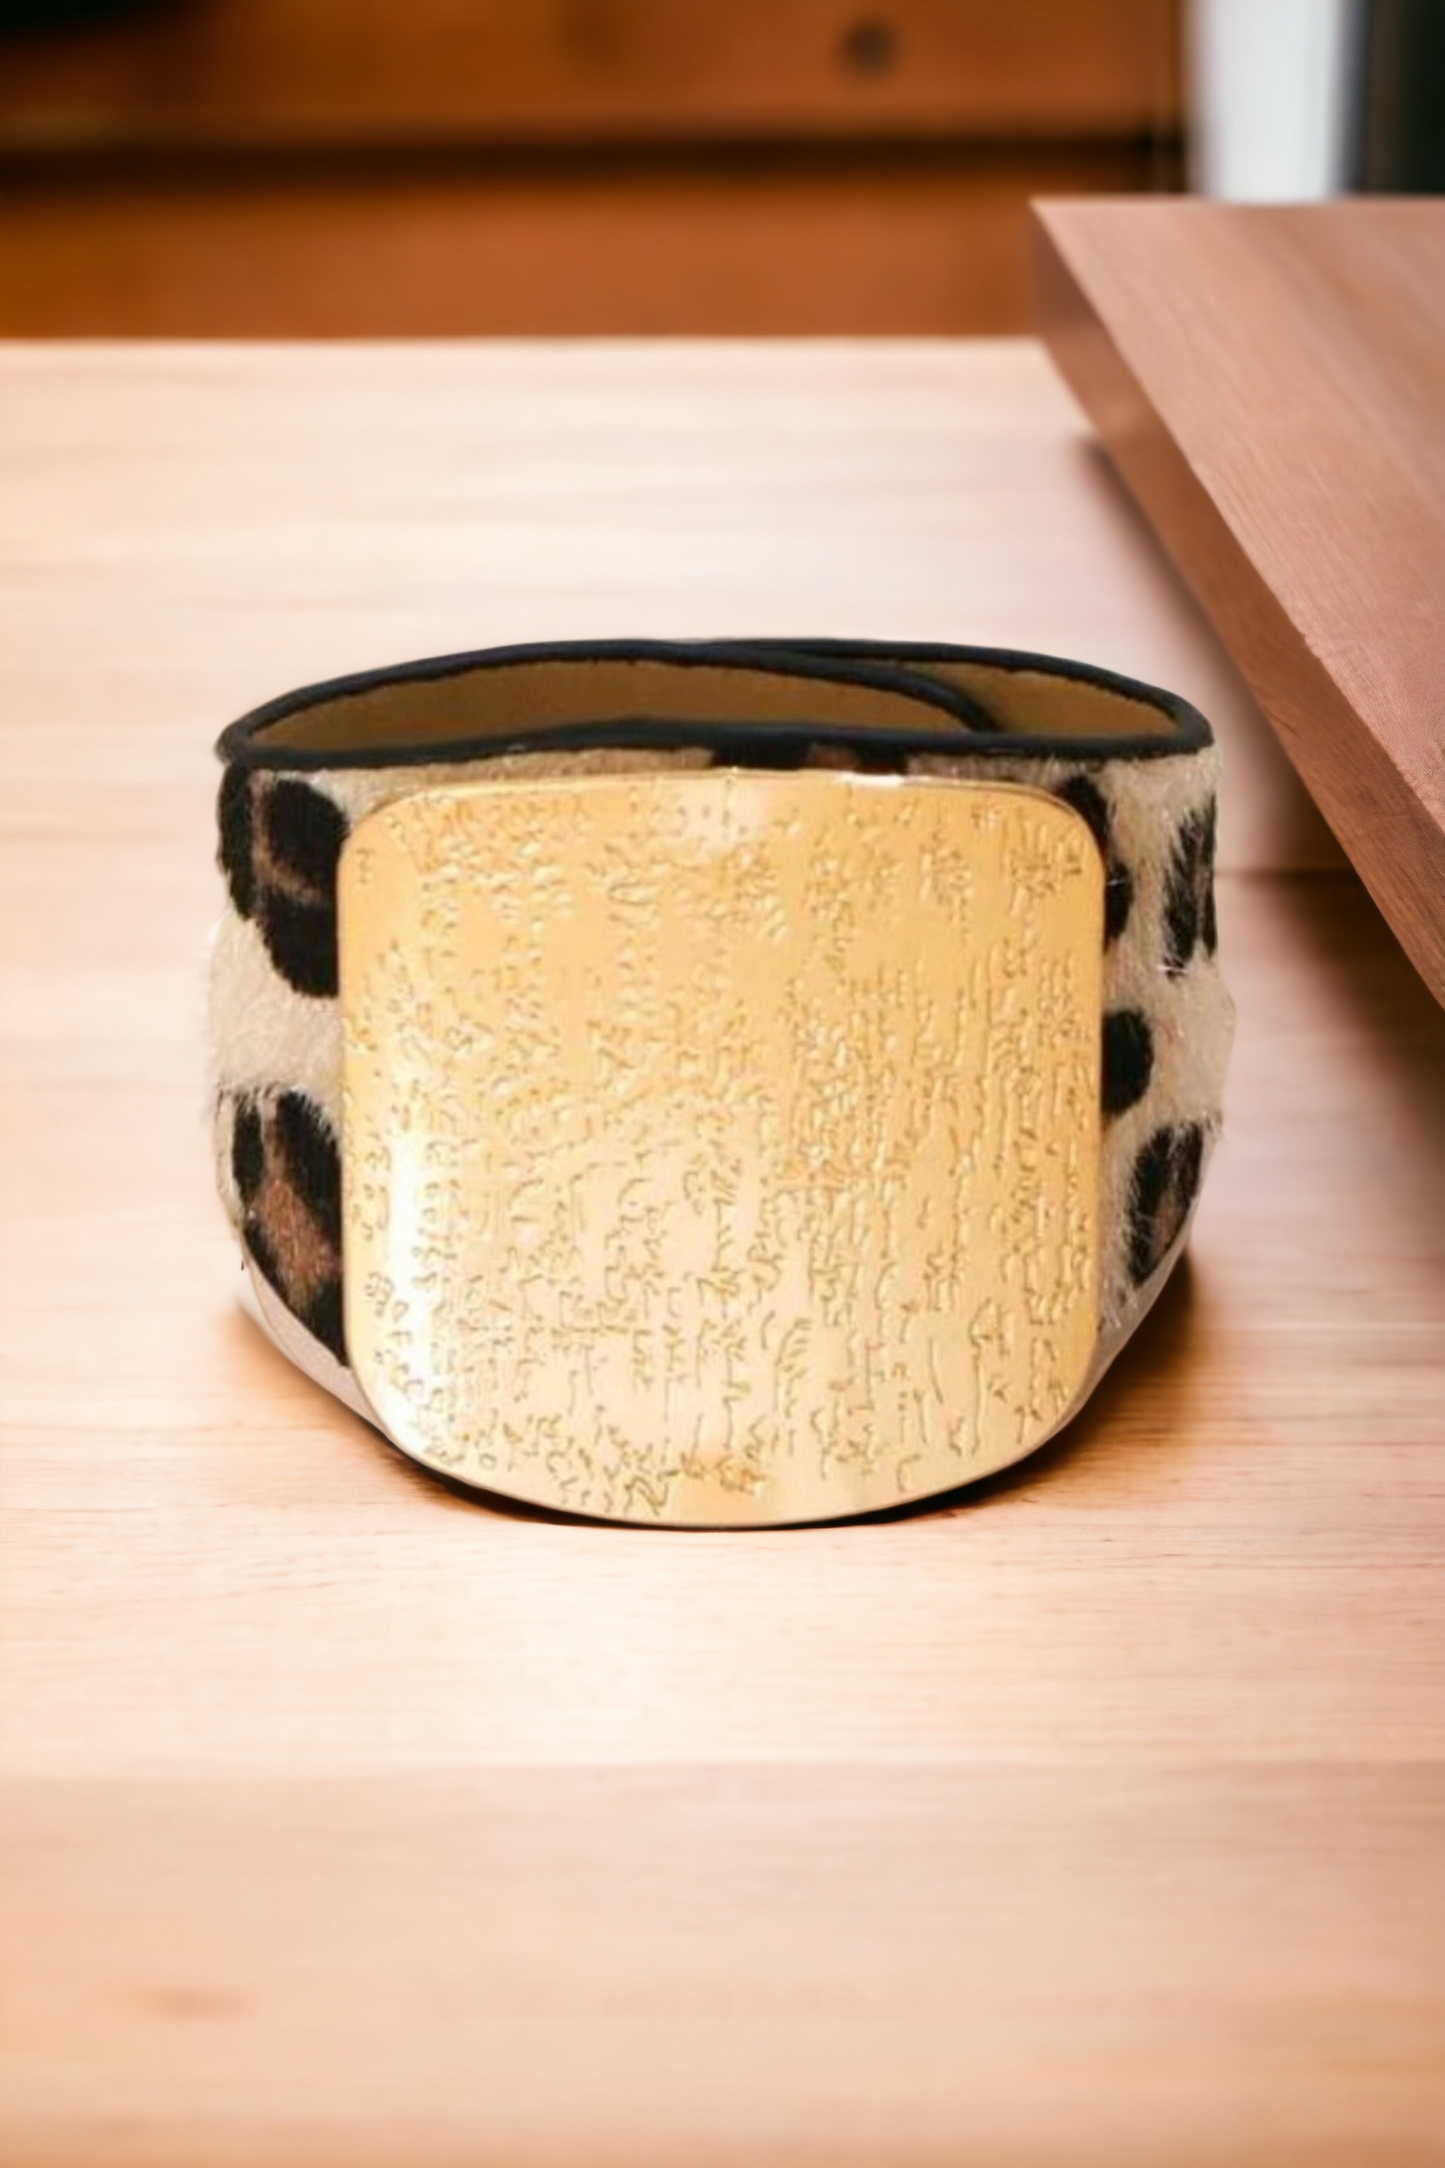 The golden leopard bracelet